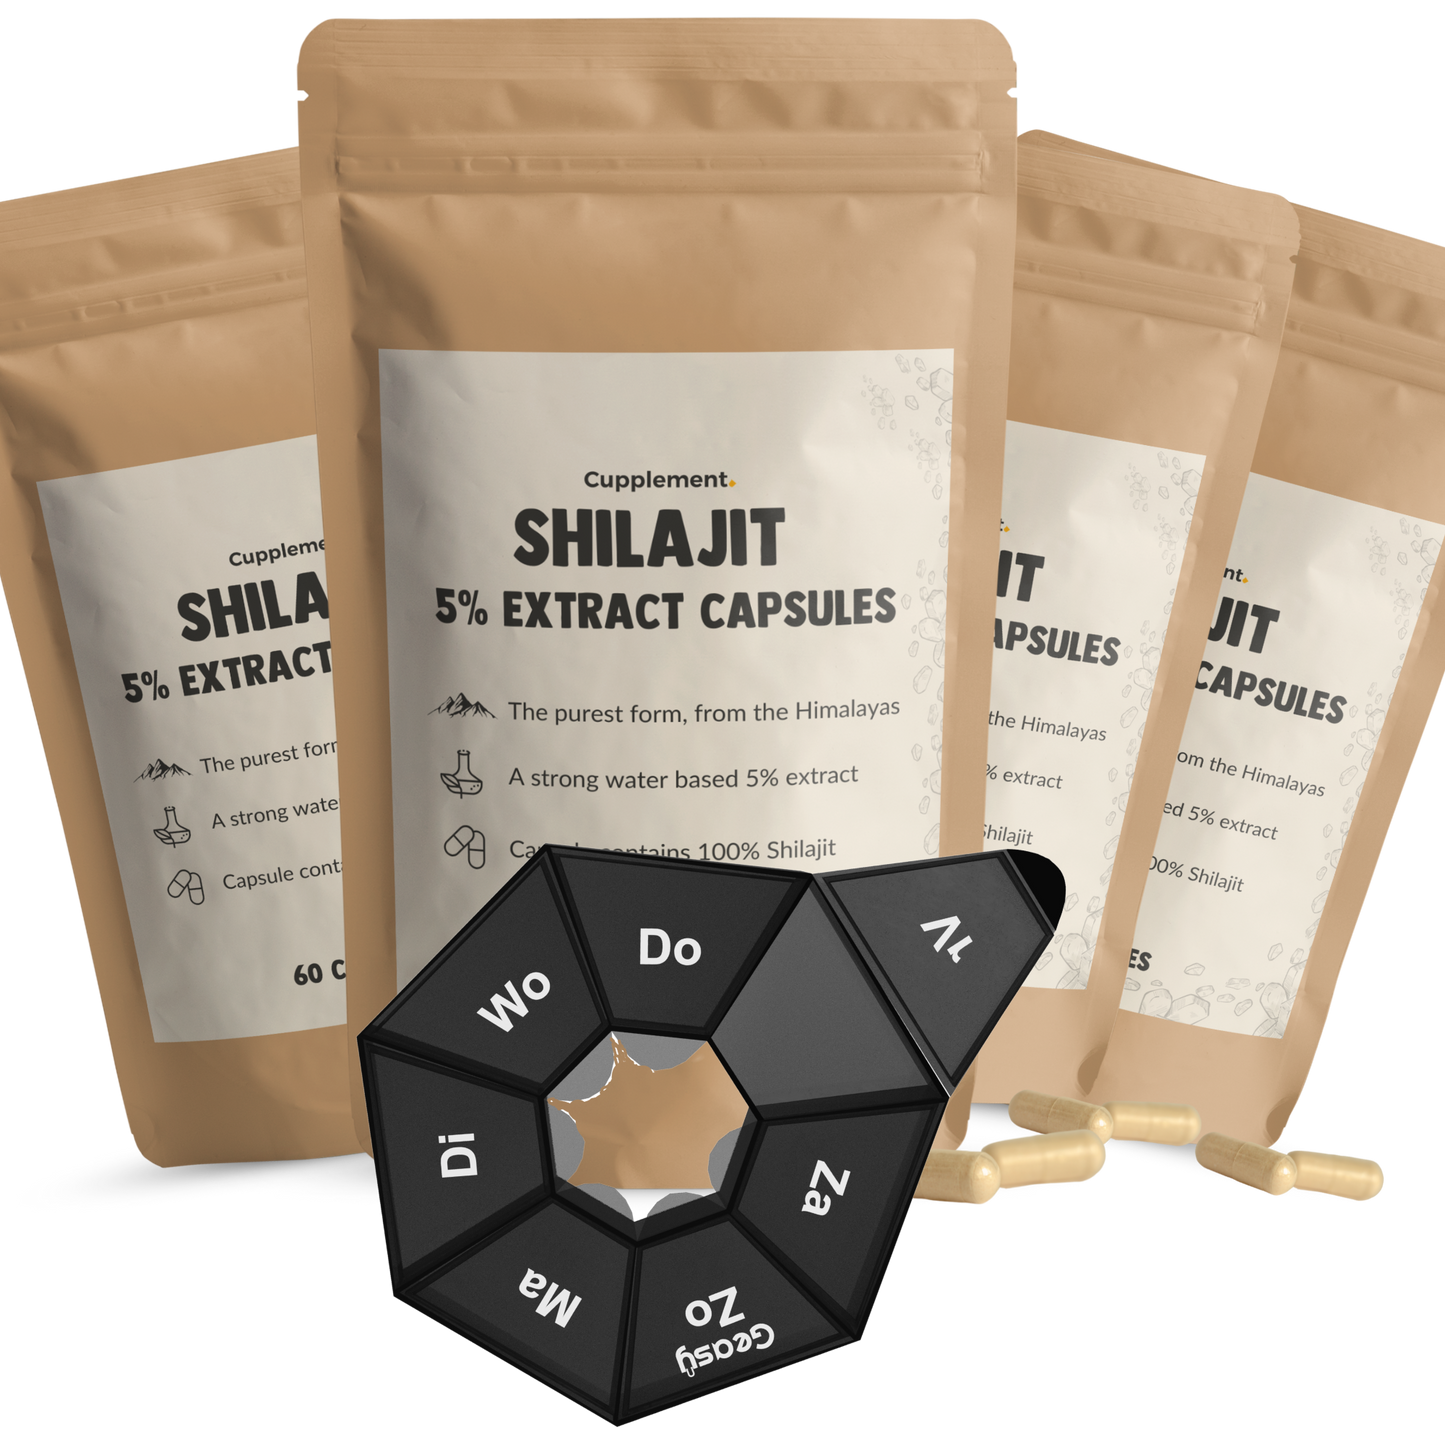 Shilajit Extract (5%) capsules